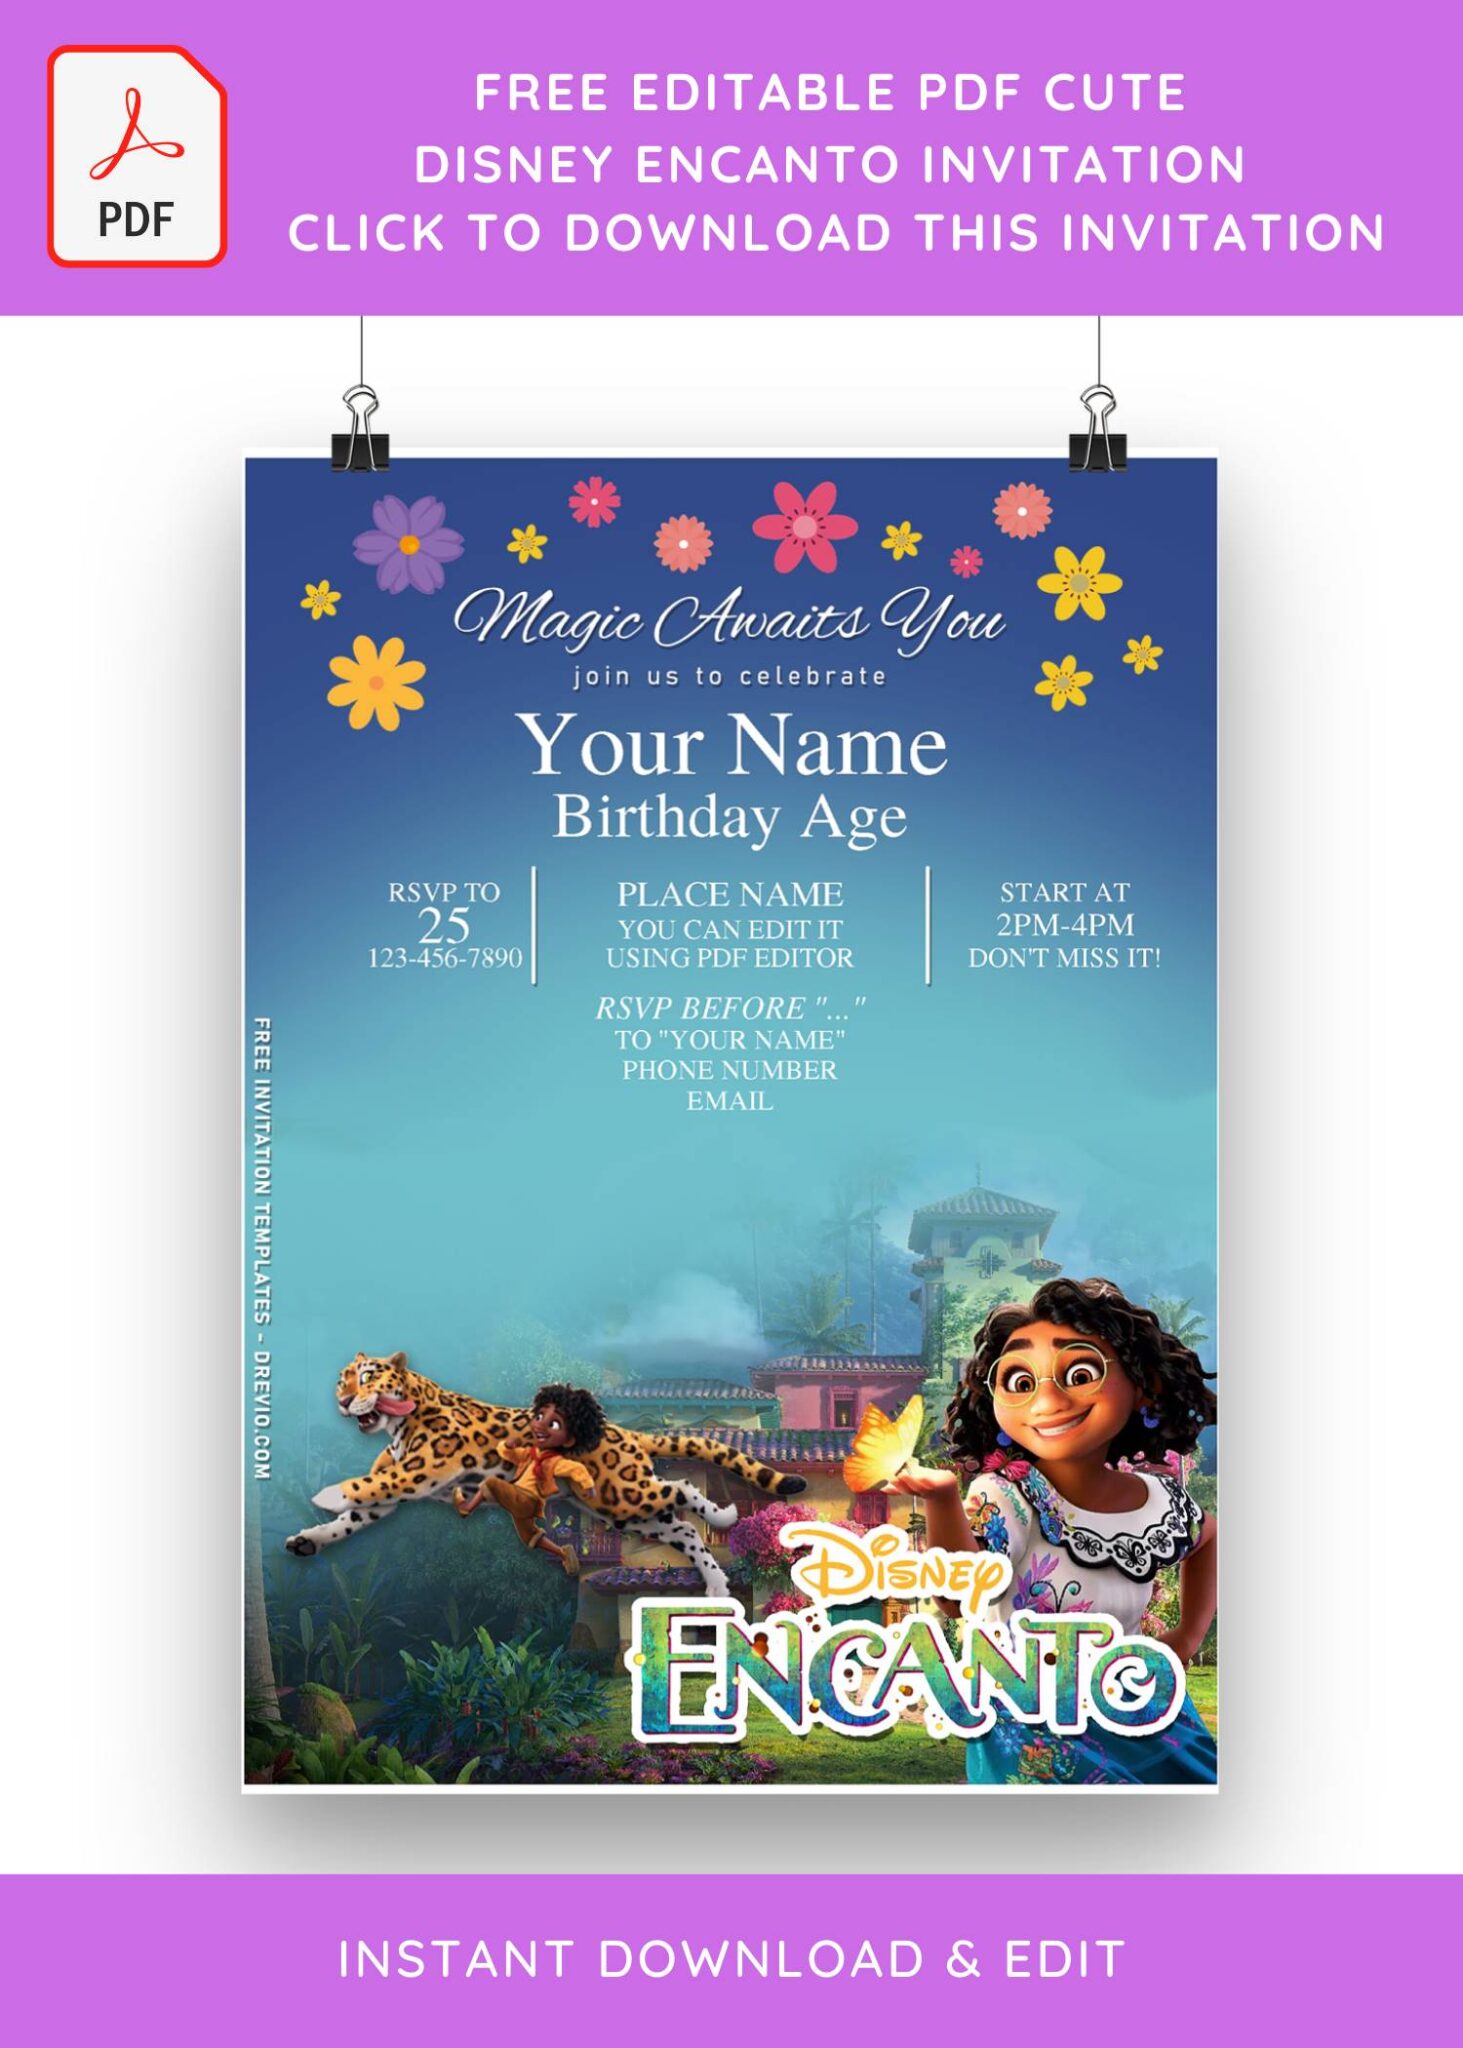 Free Editable PDF Cute Encanto Birthday Invitation Templates Download